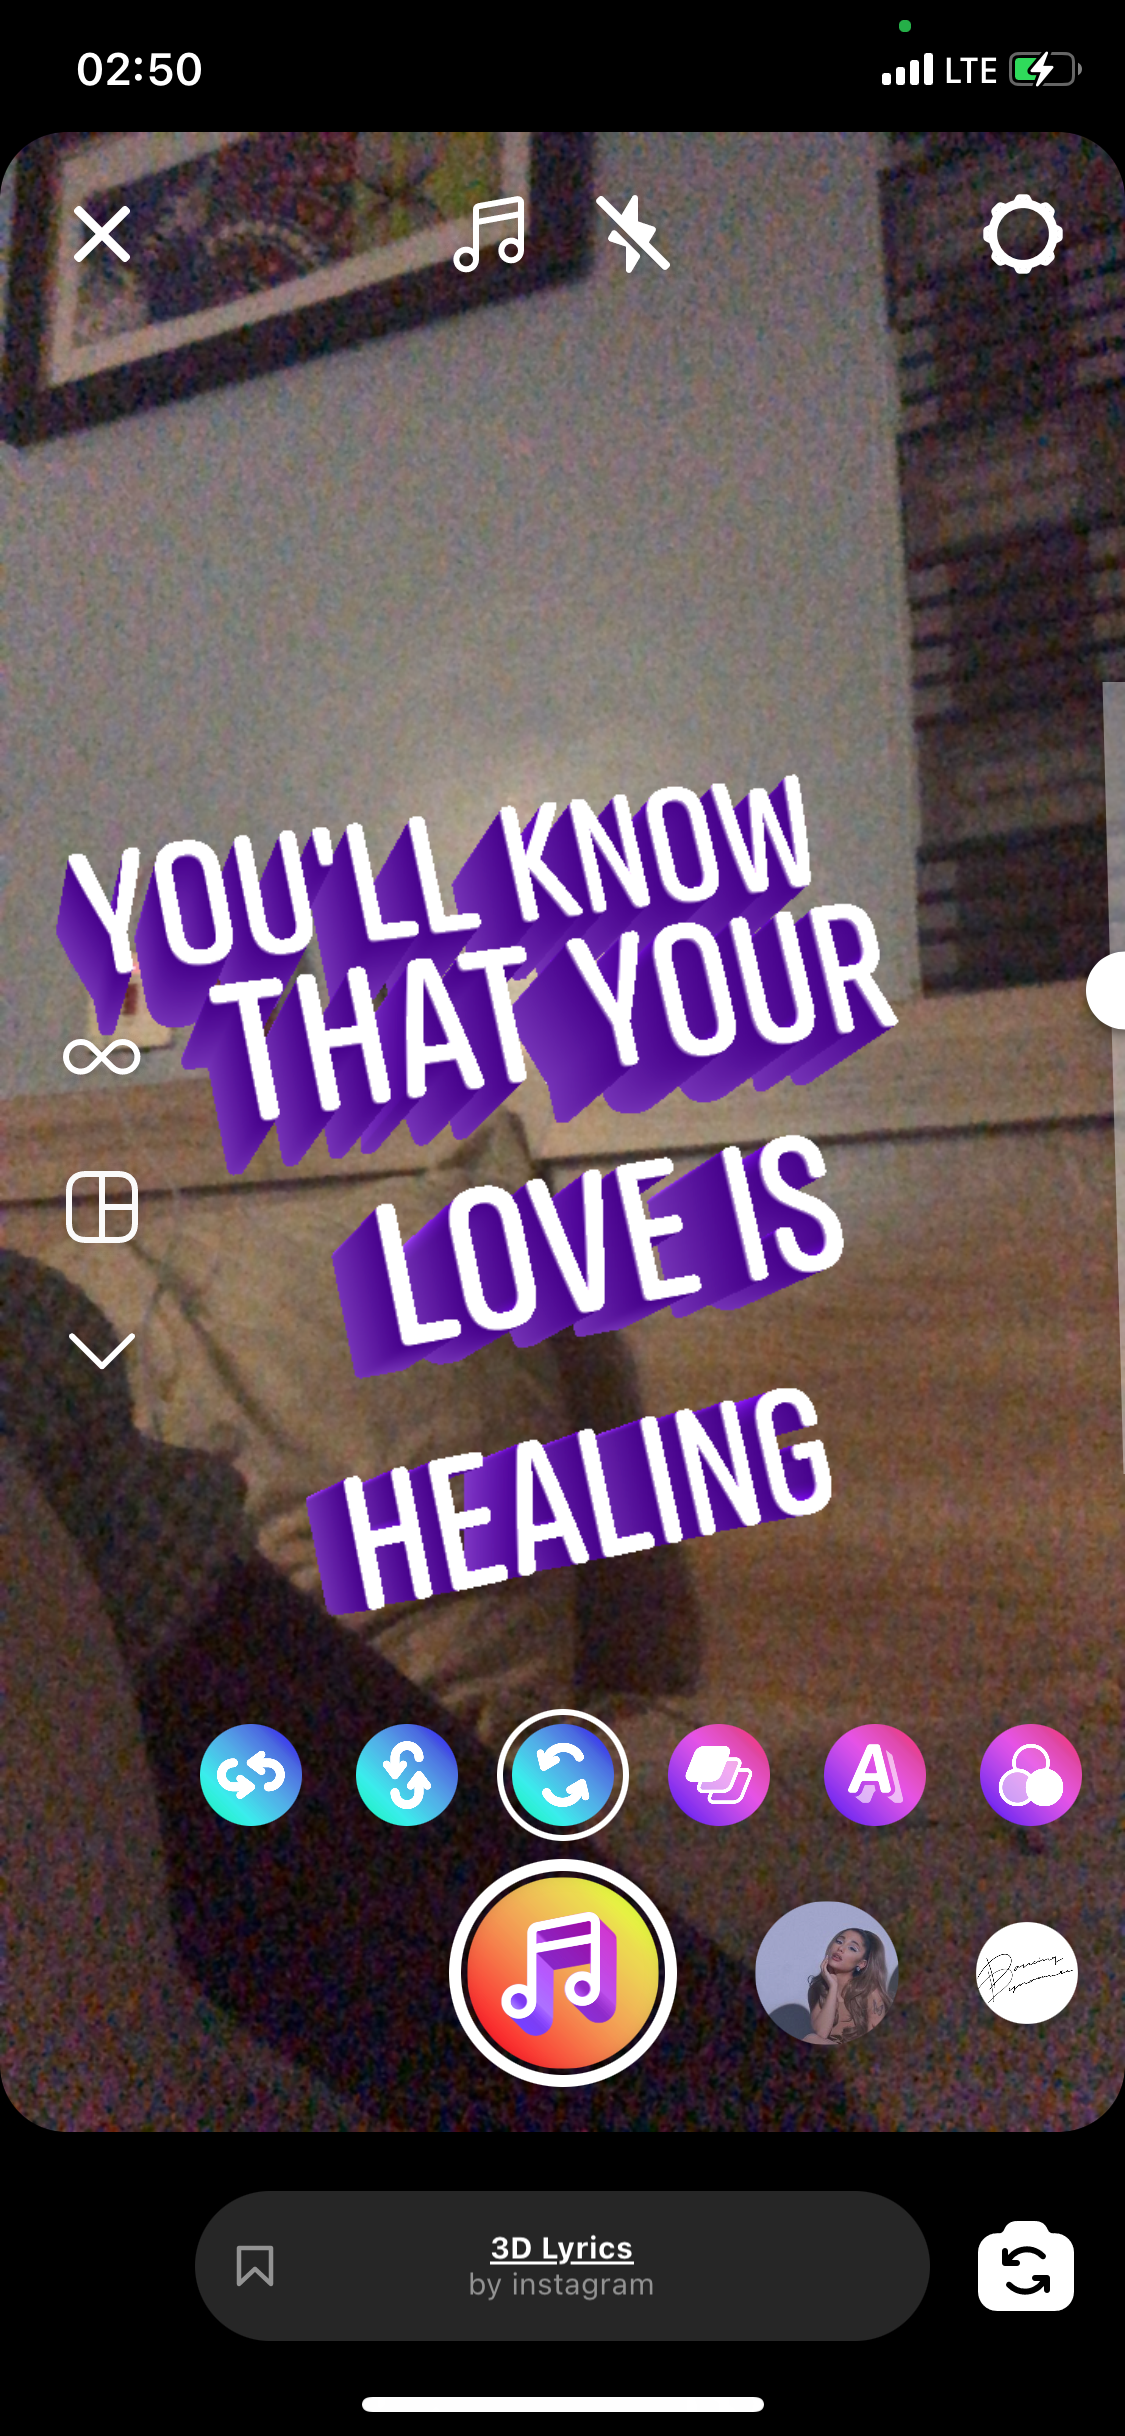 3D Lyrics Instagram AR Filter